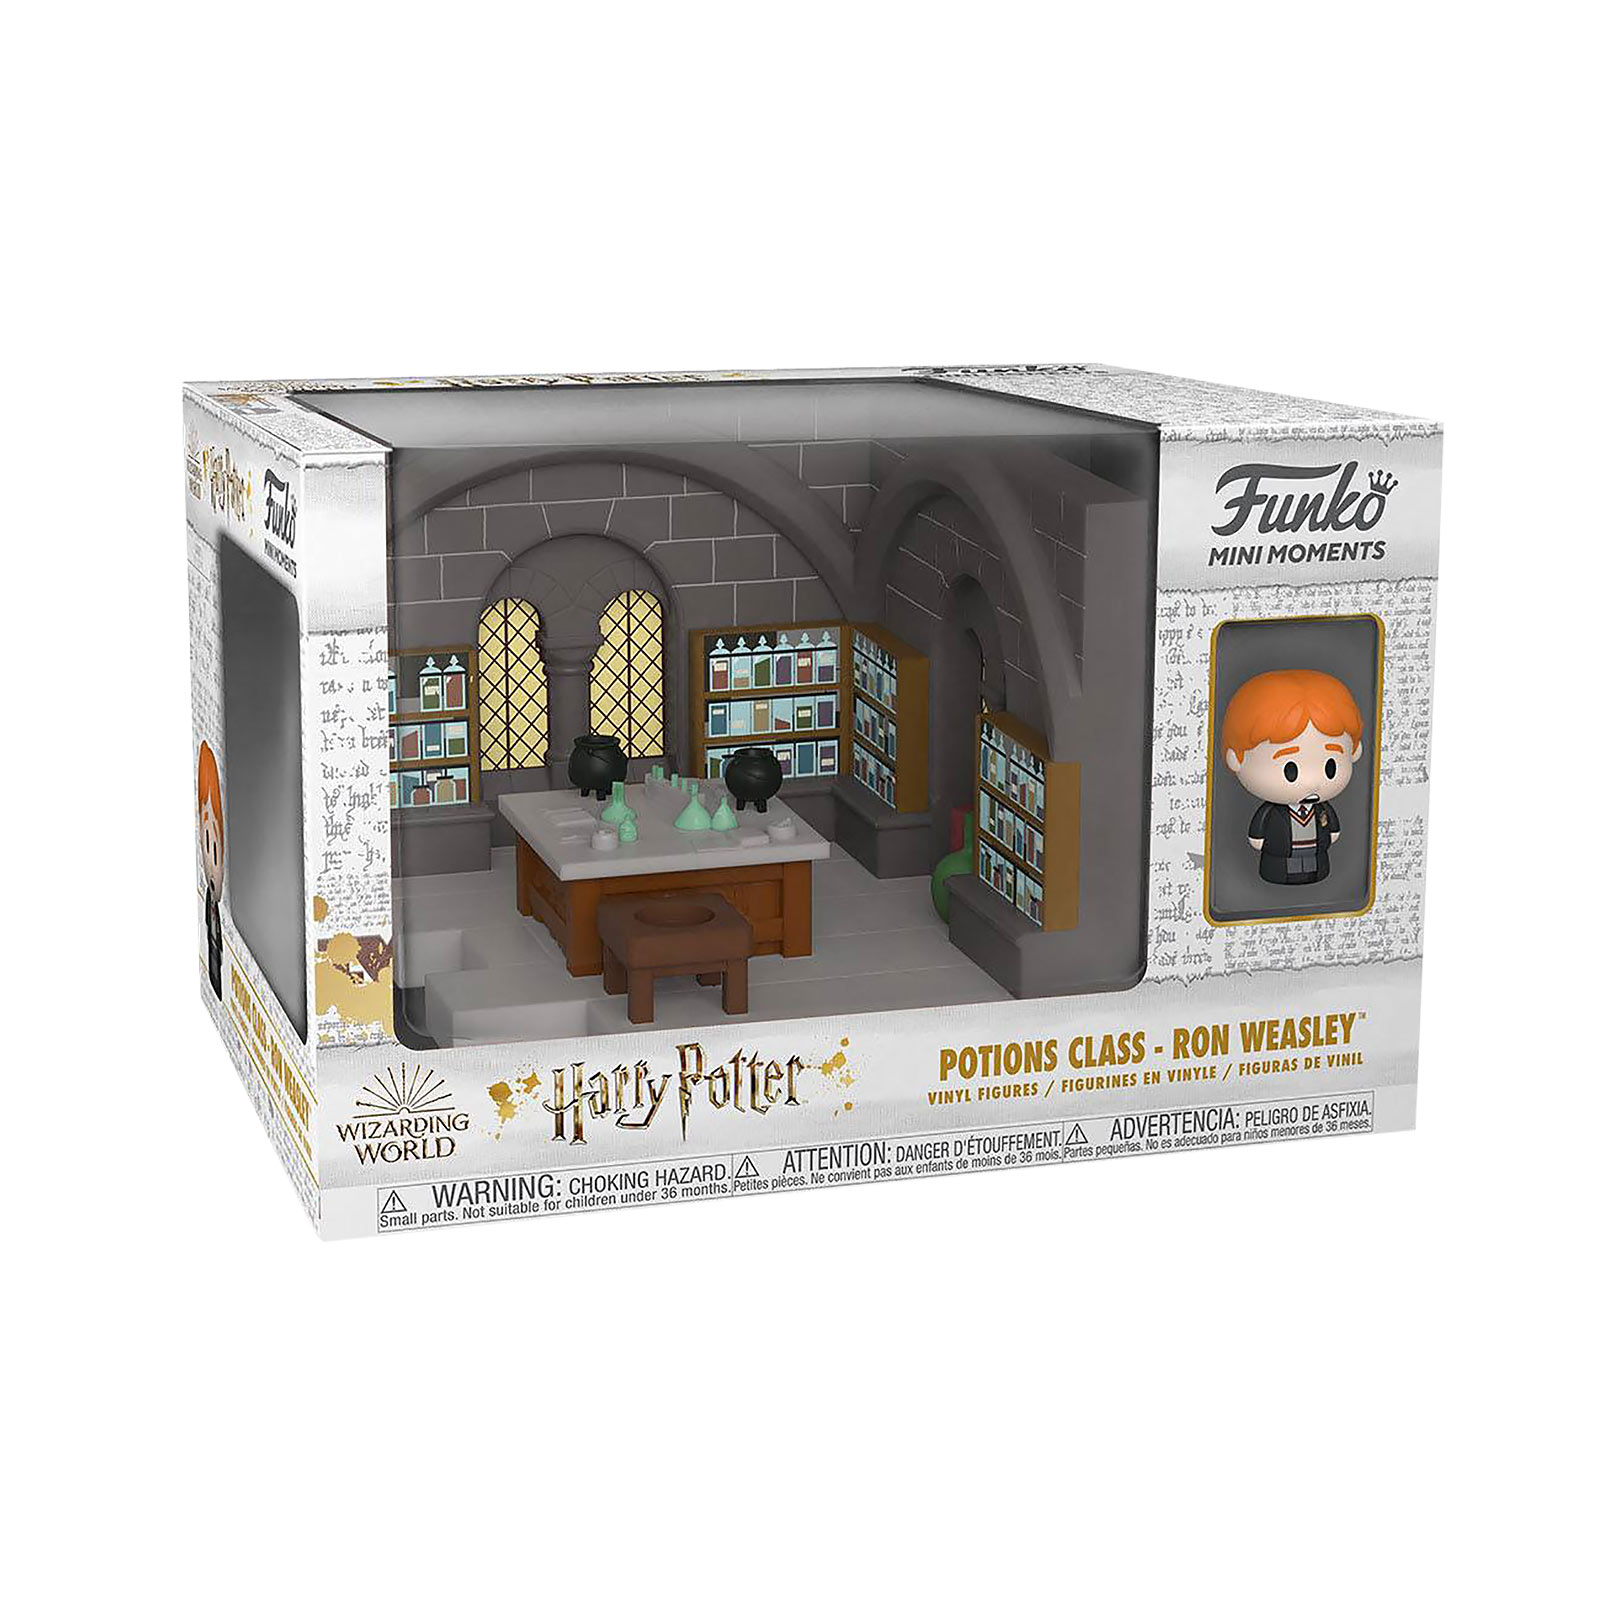 Ron Weasley Zaubertrankstunde Funko Pop Mini Moments Figur - Harry Potter